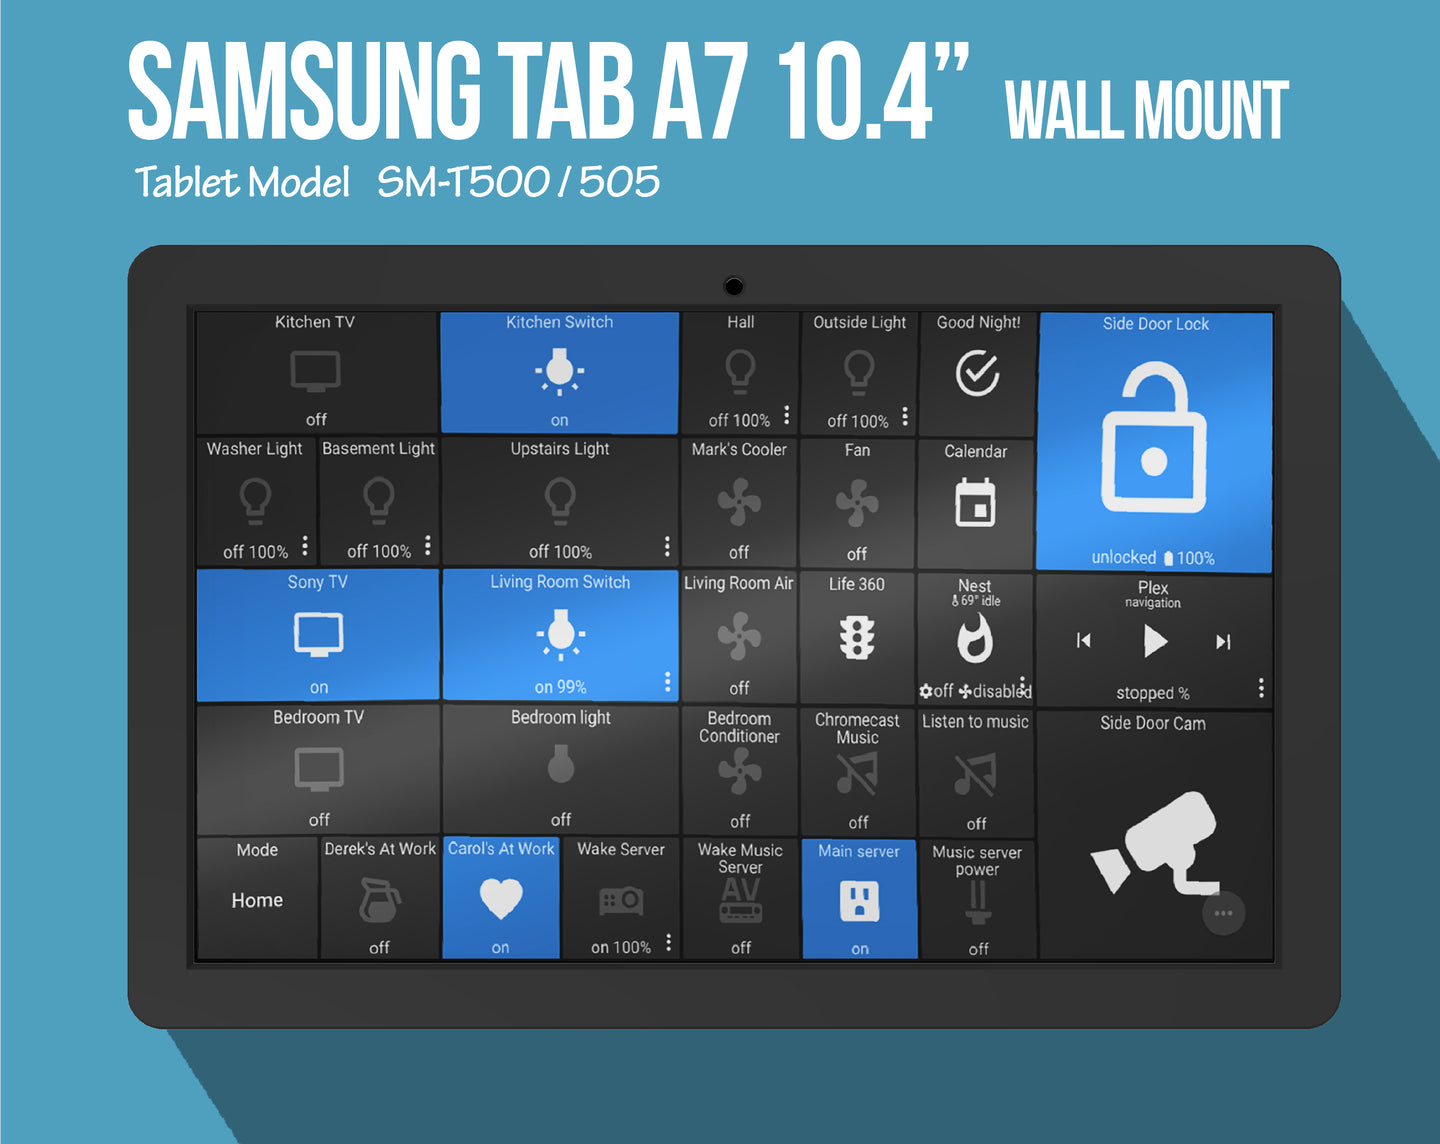 Samsung Tab A7 10.4 Tablet ( SM-T500 / 505 ) Wall Mount – BLACK